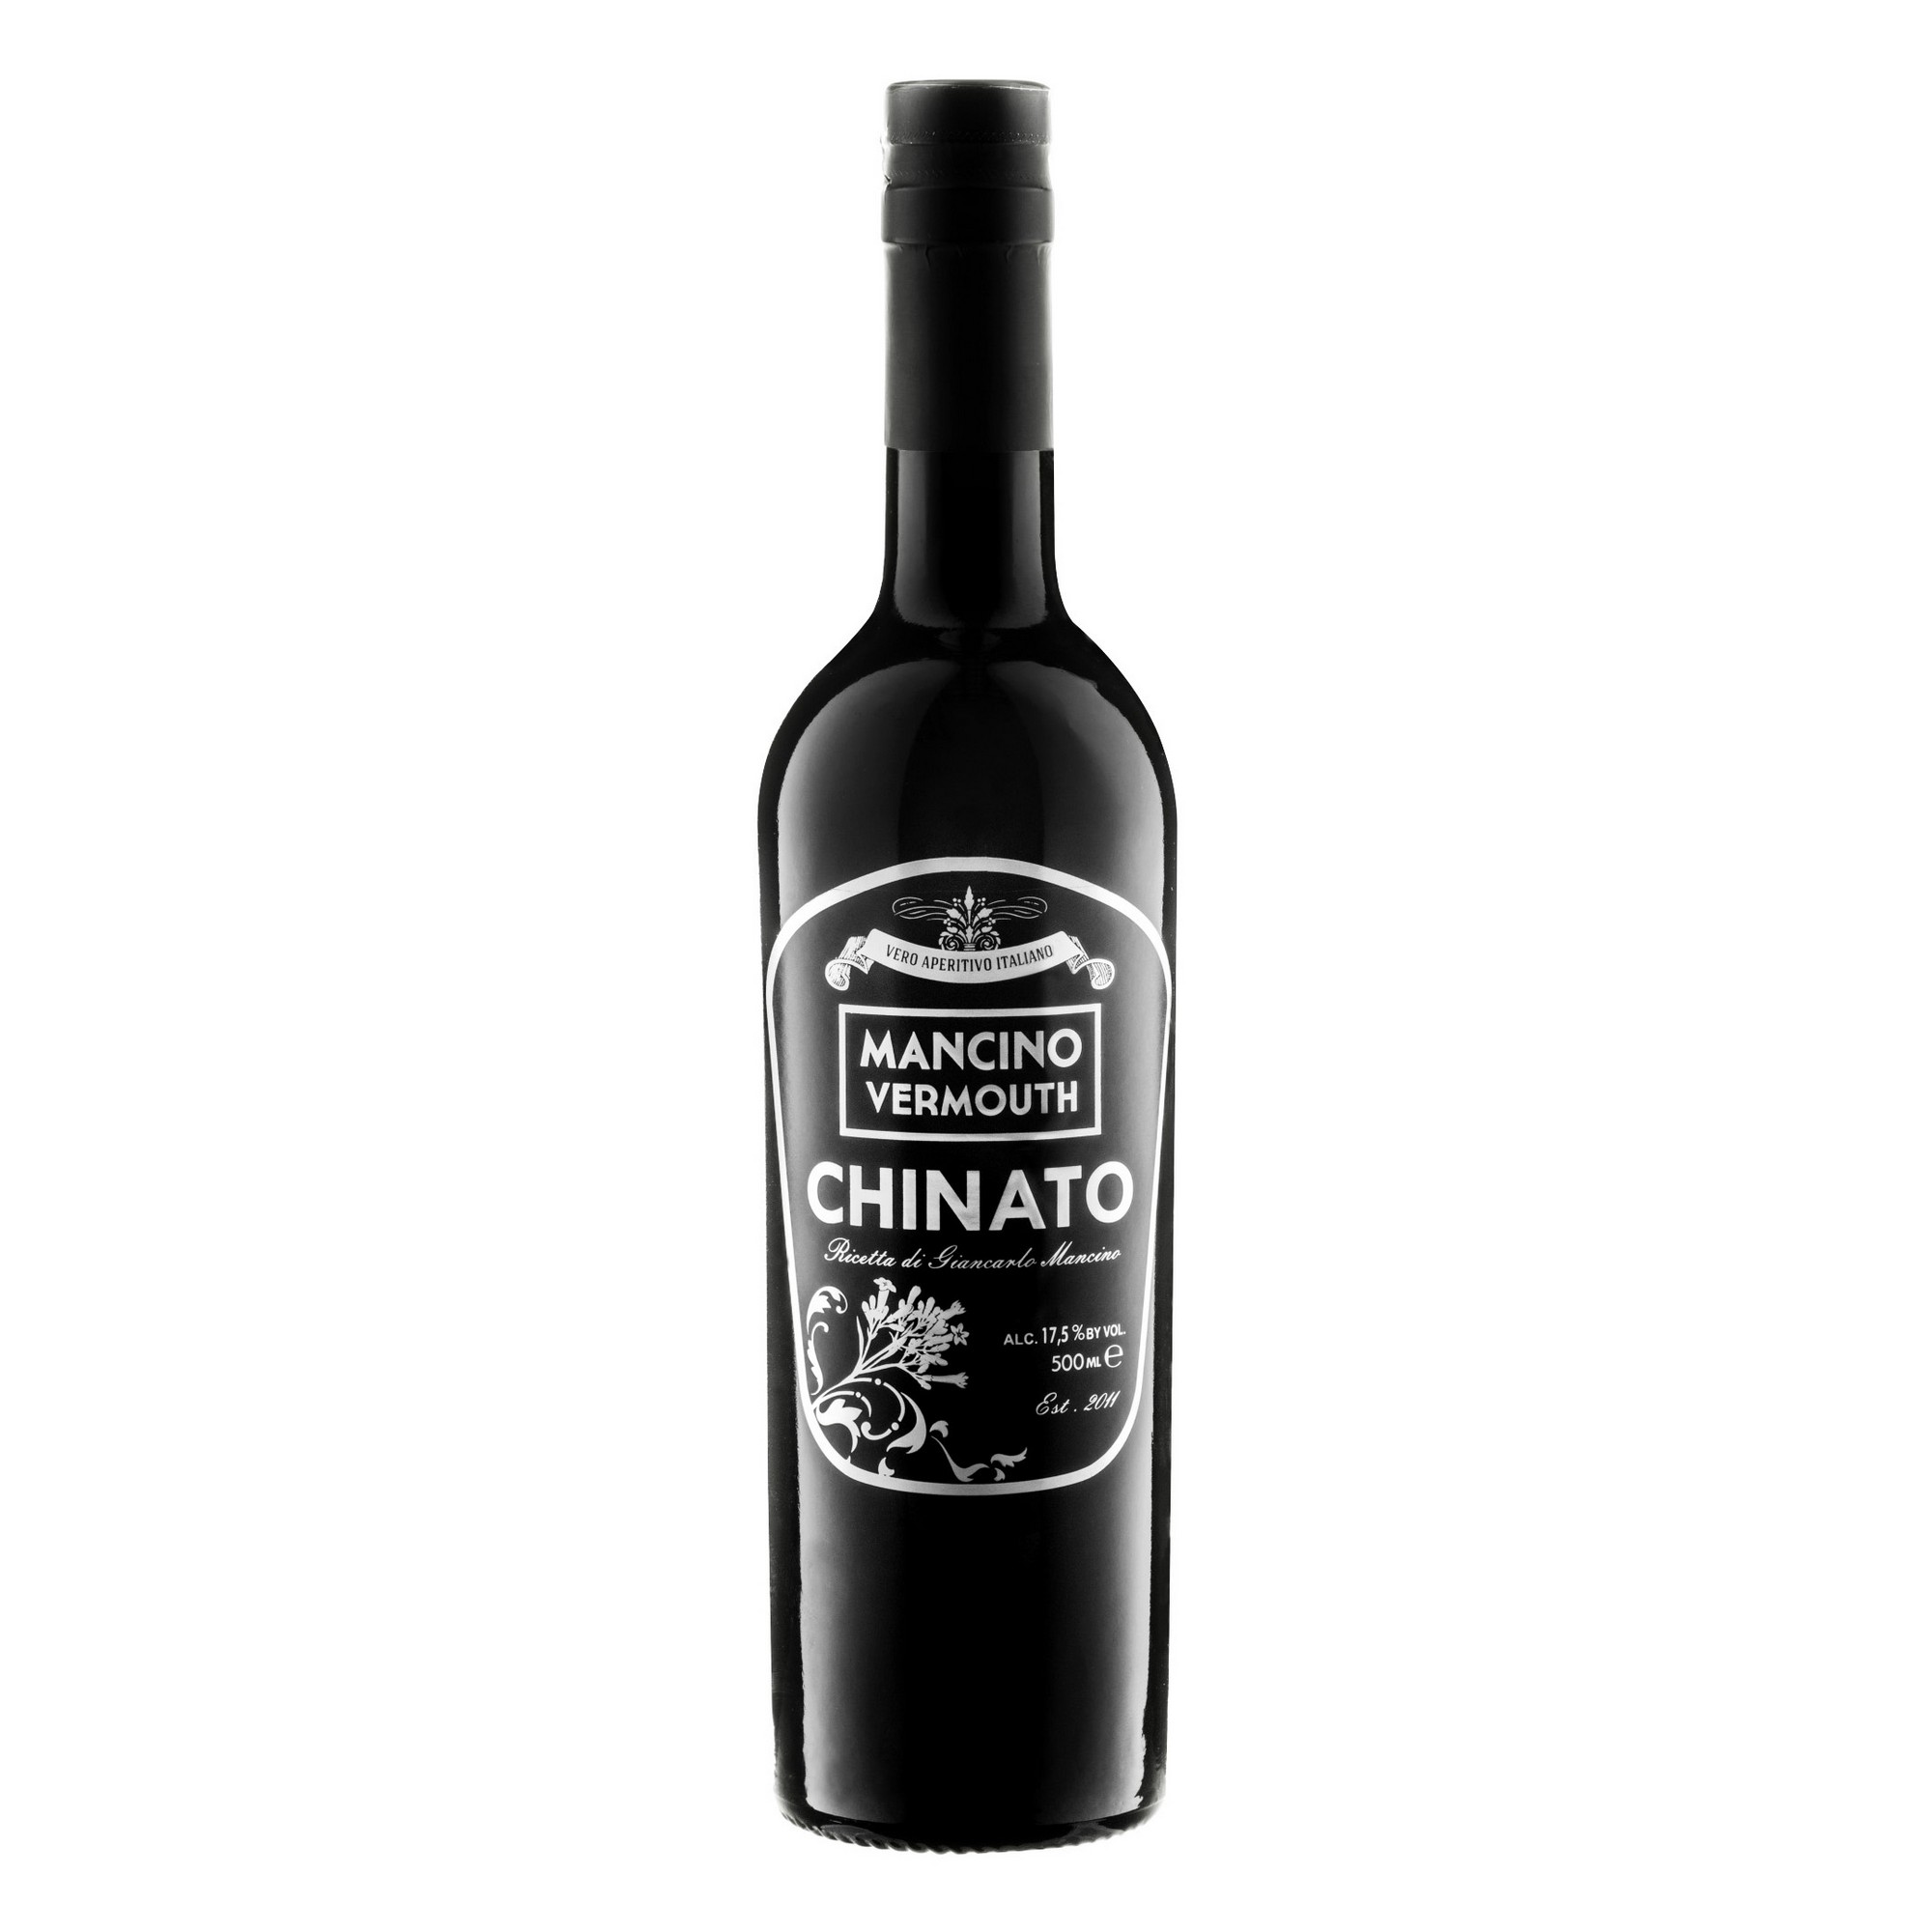 Mancino vermouth chinato   17,5%   50cl